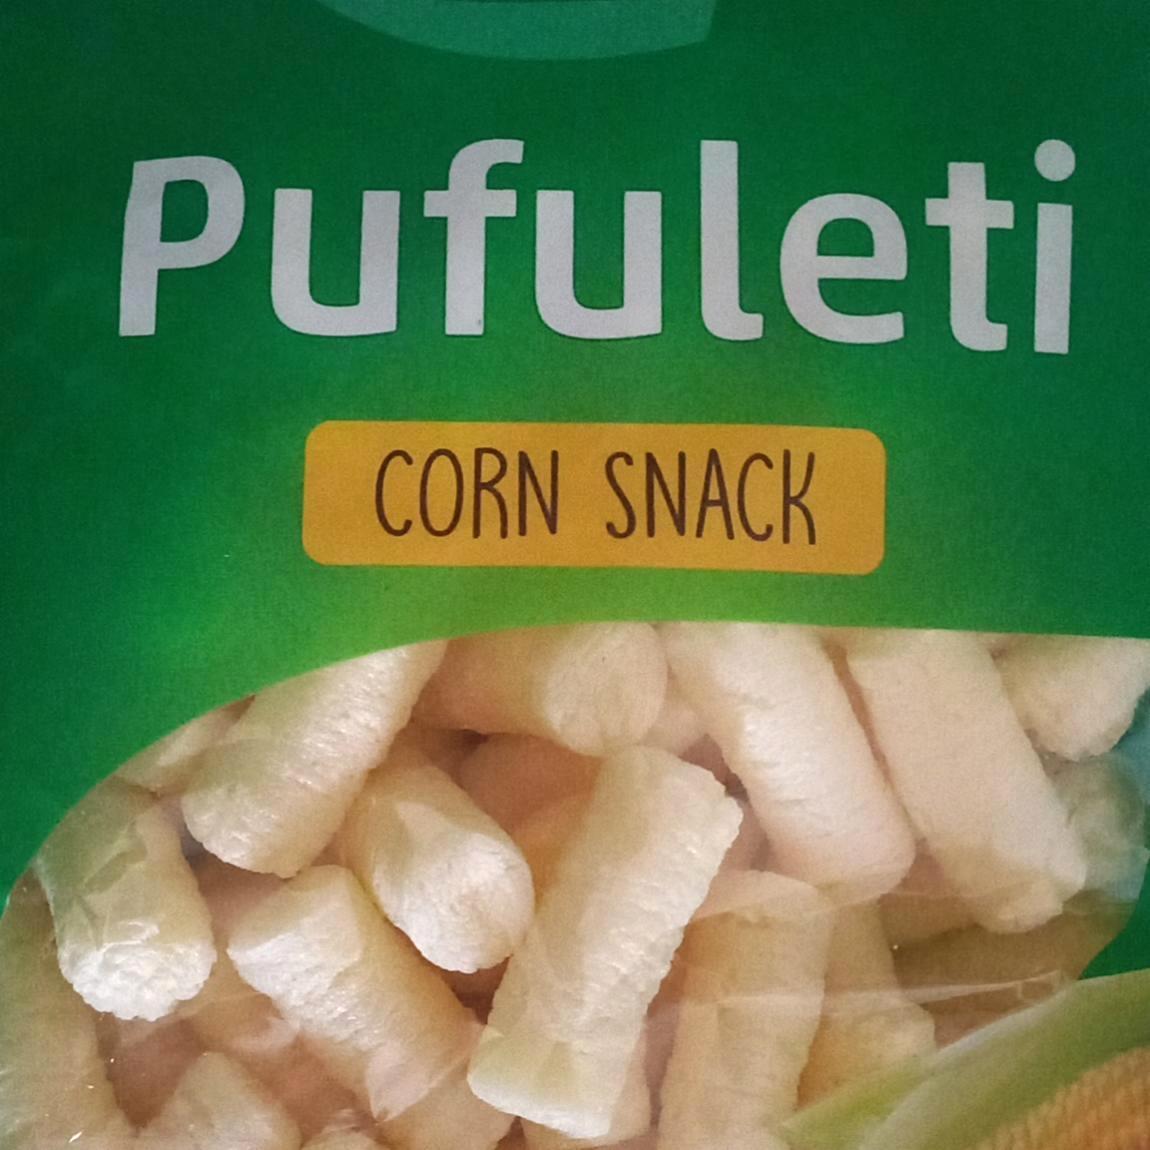 Képek - Pufuleti corn snack My Bio